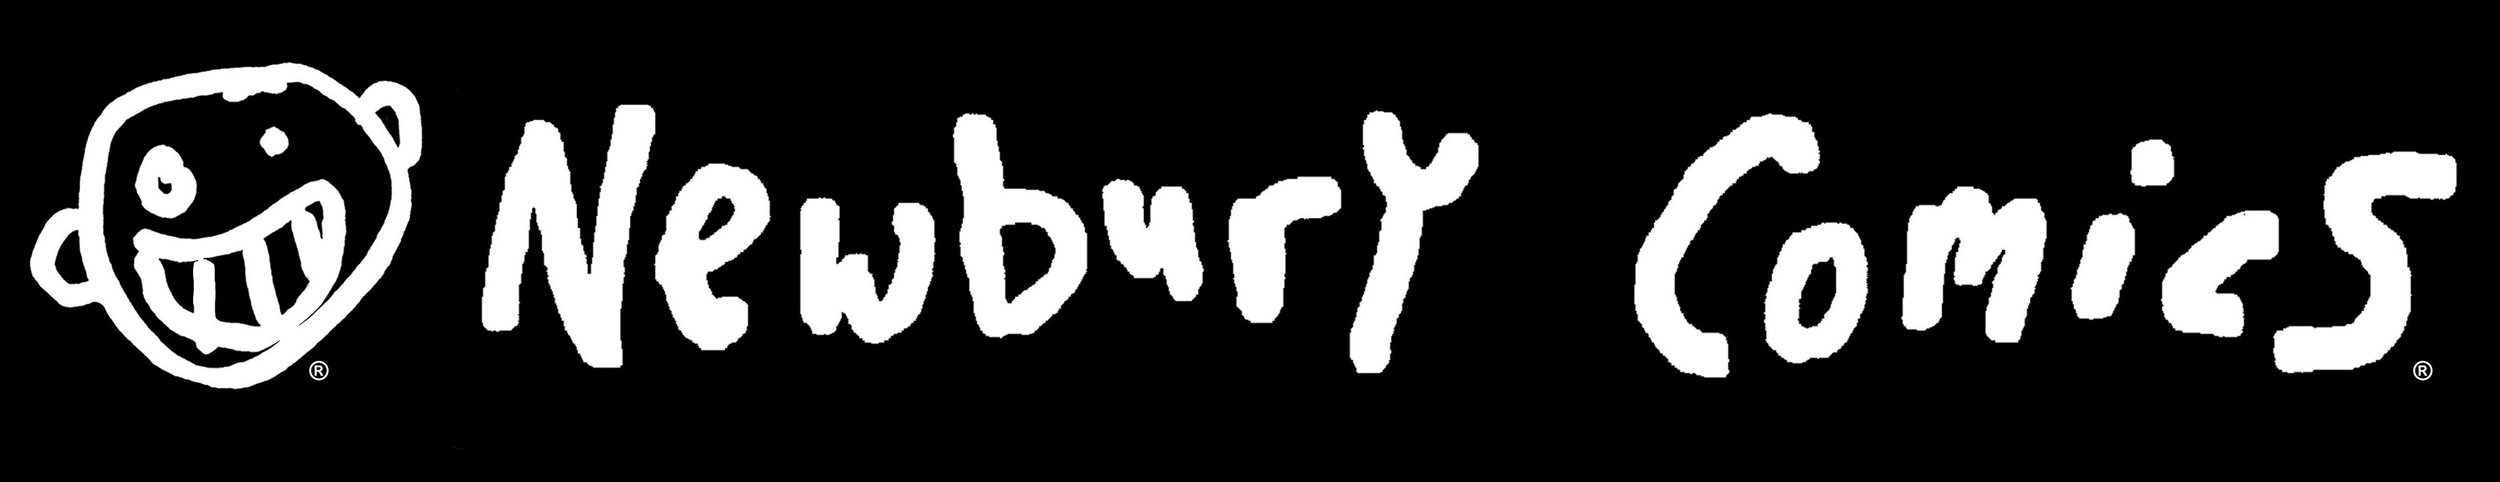 Newbury Comics Logo.jpeg